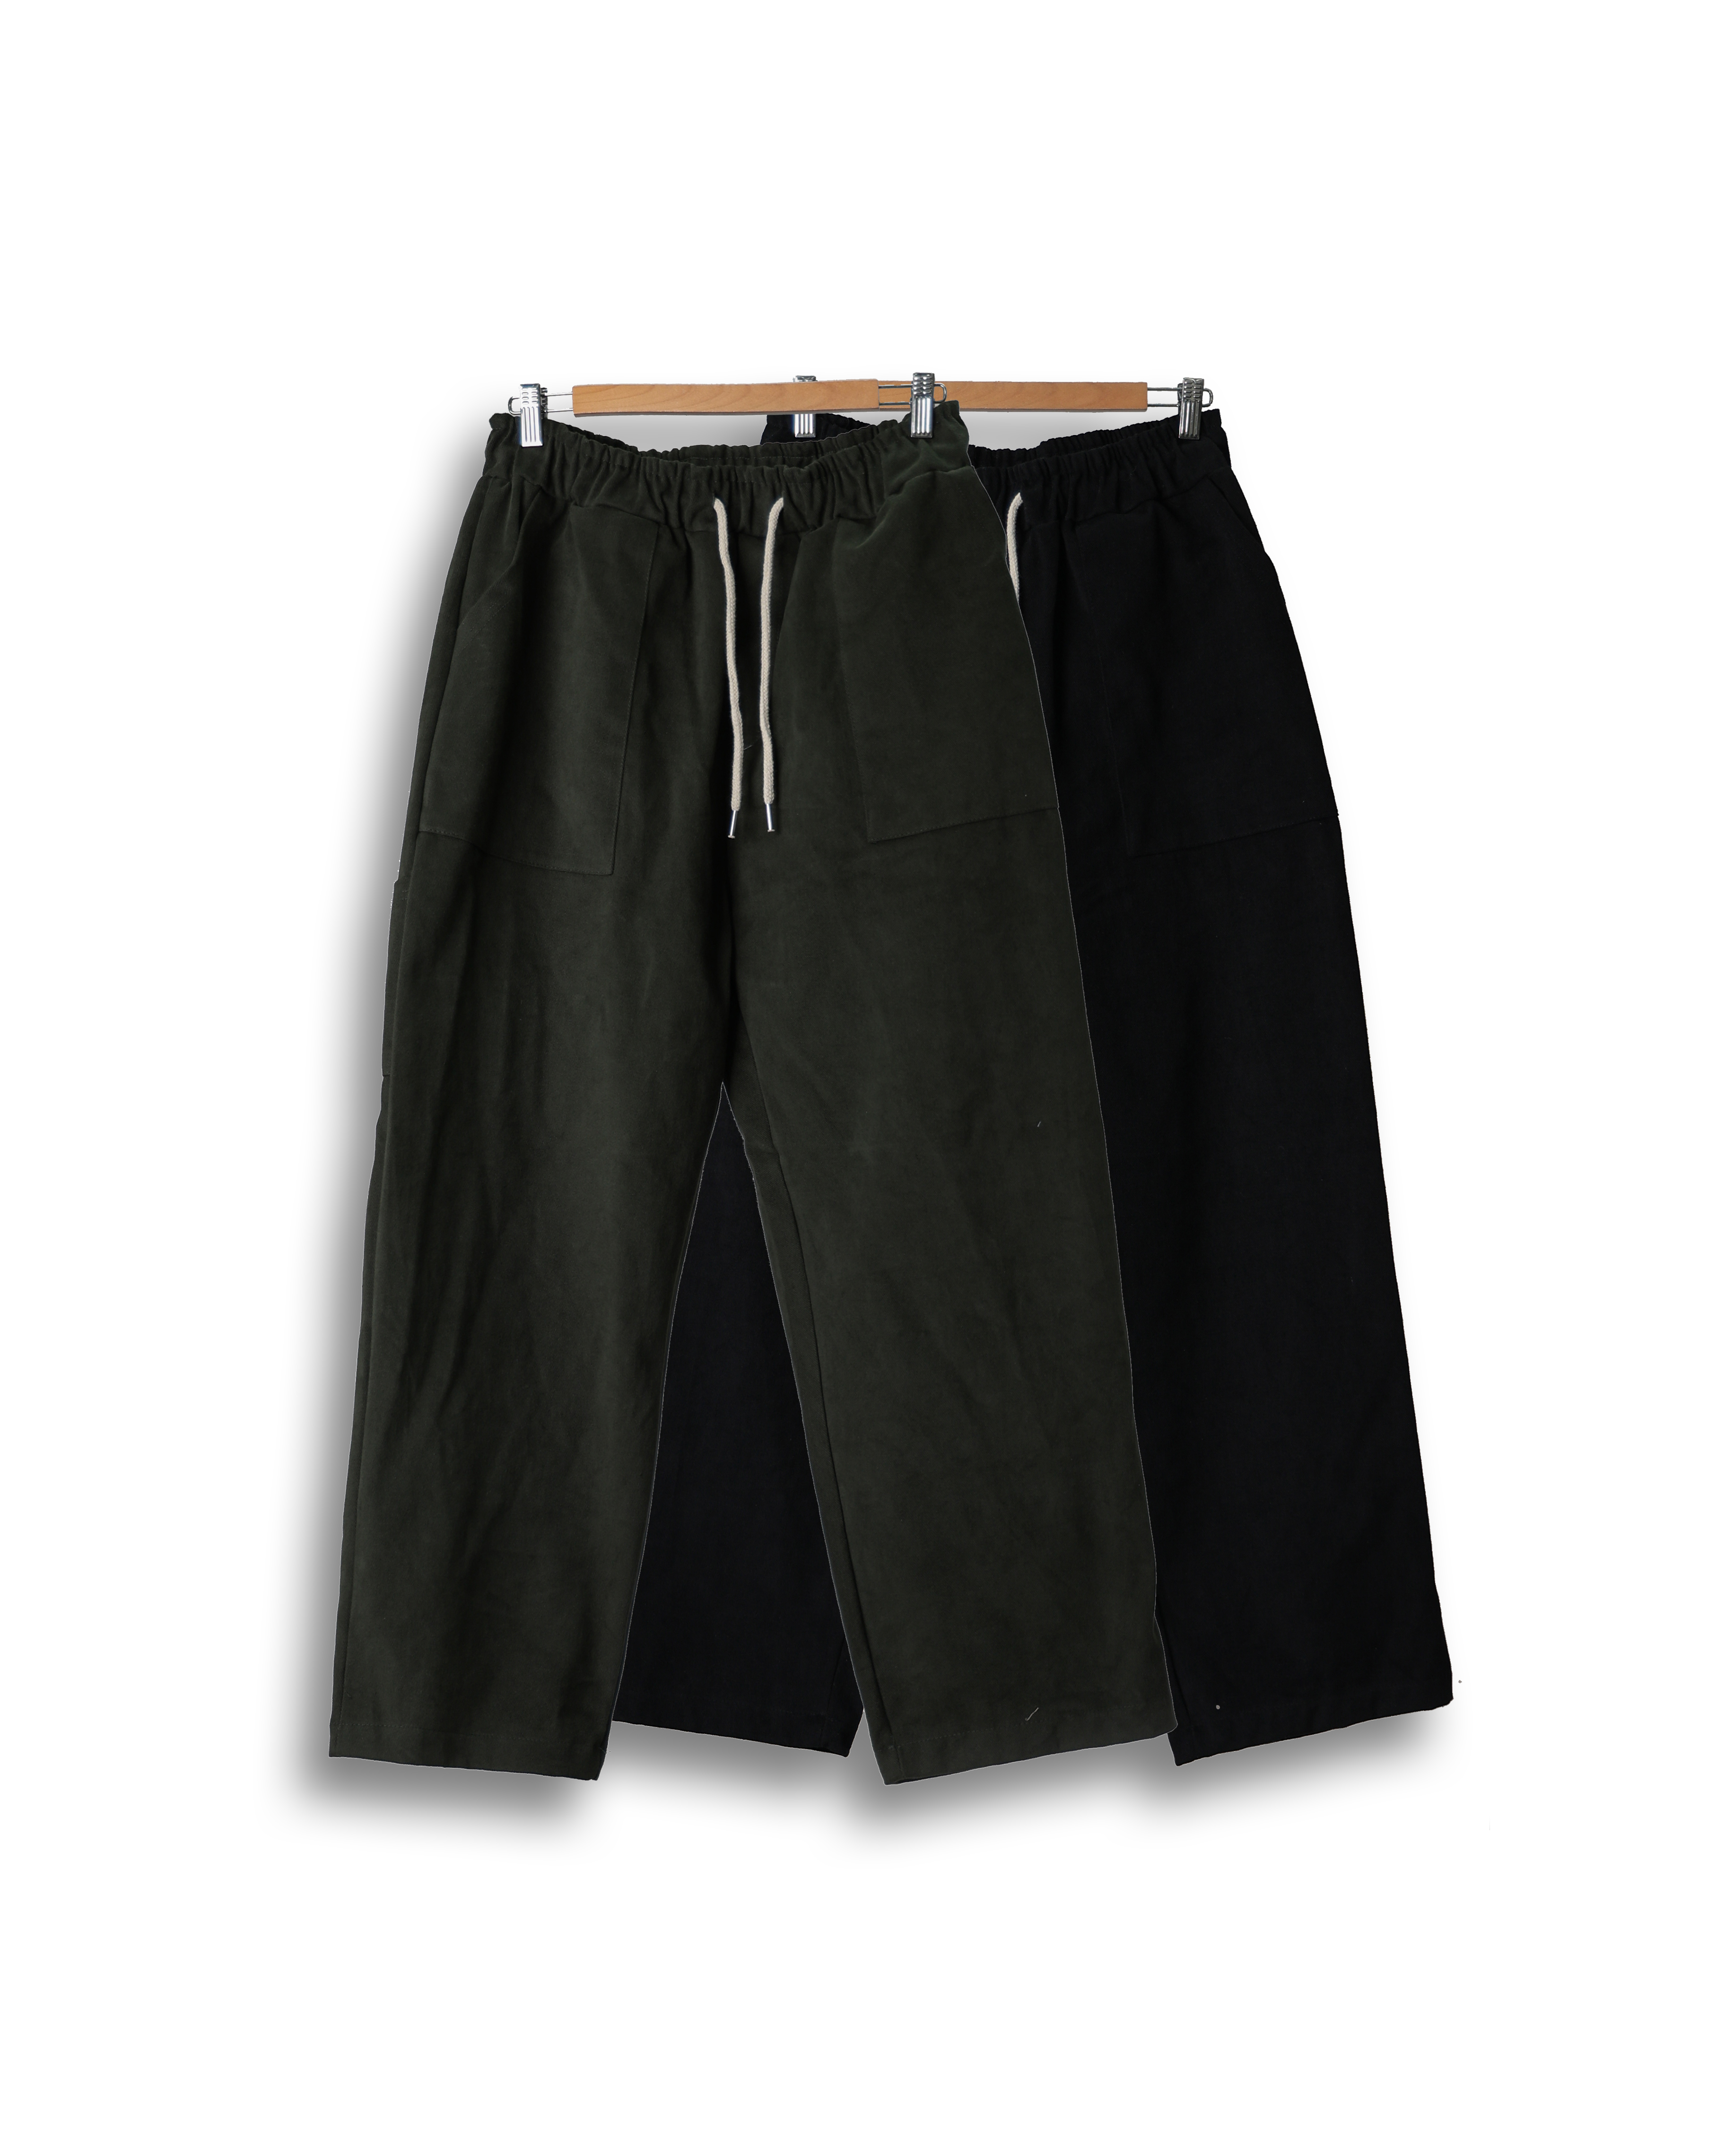 HDORW Peach Carpenter Fatigue Pants (Black/Olive)